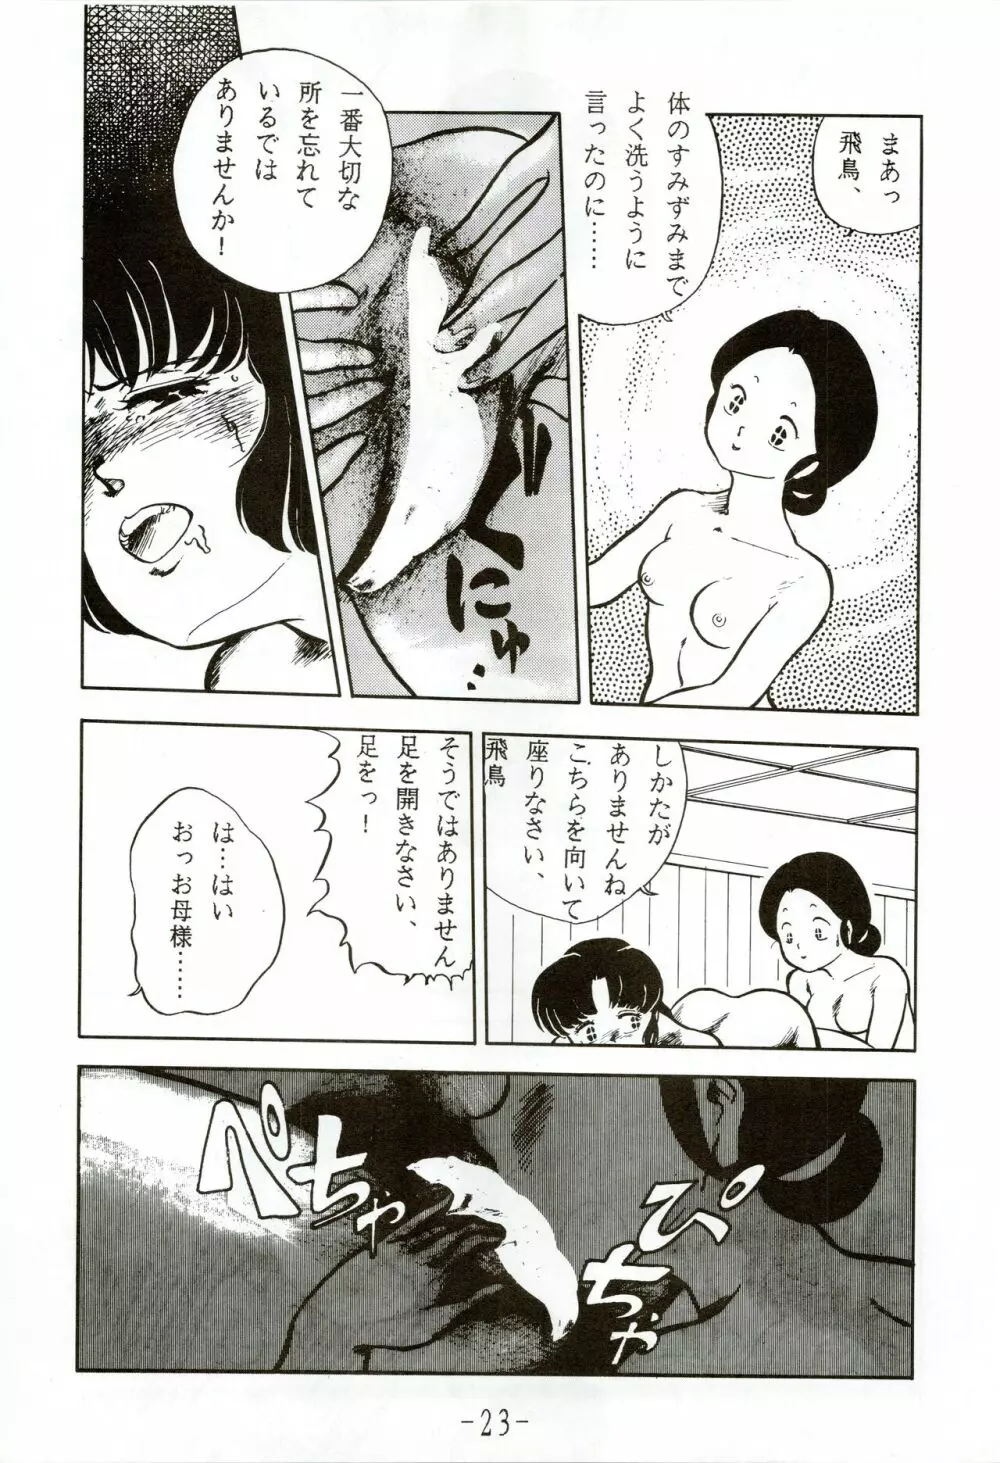 甲冑伝説 - page23